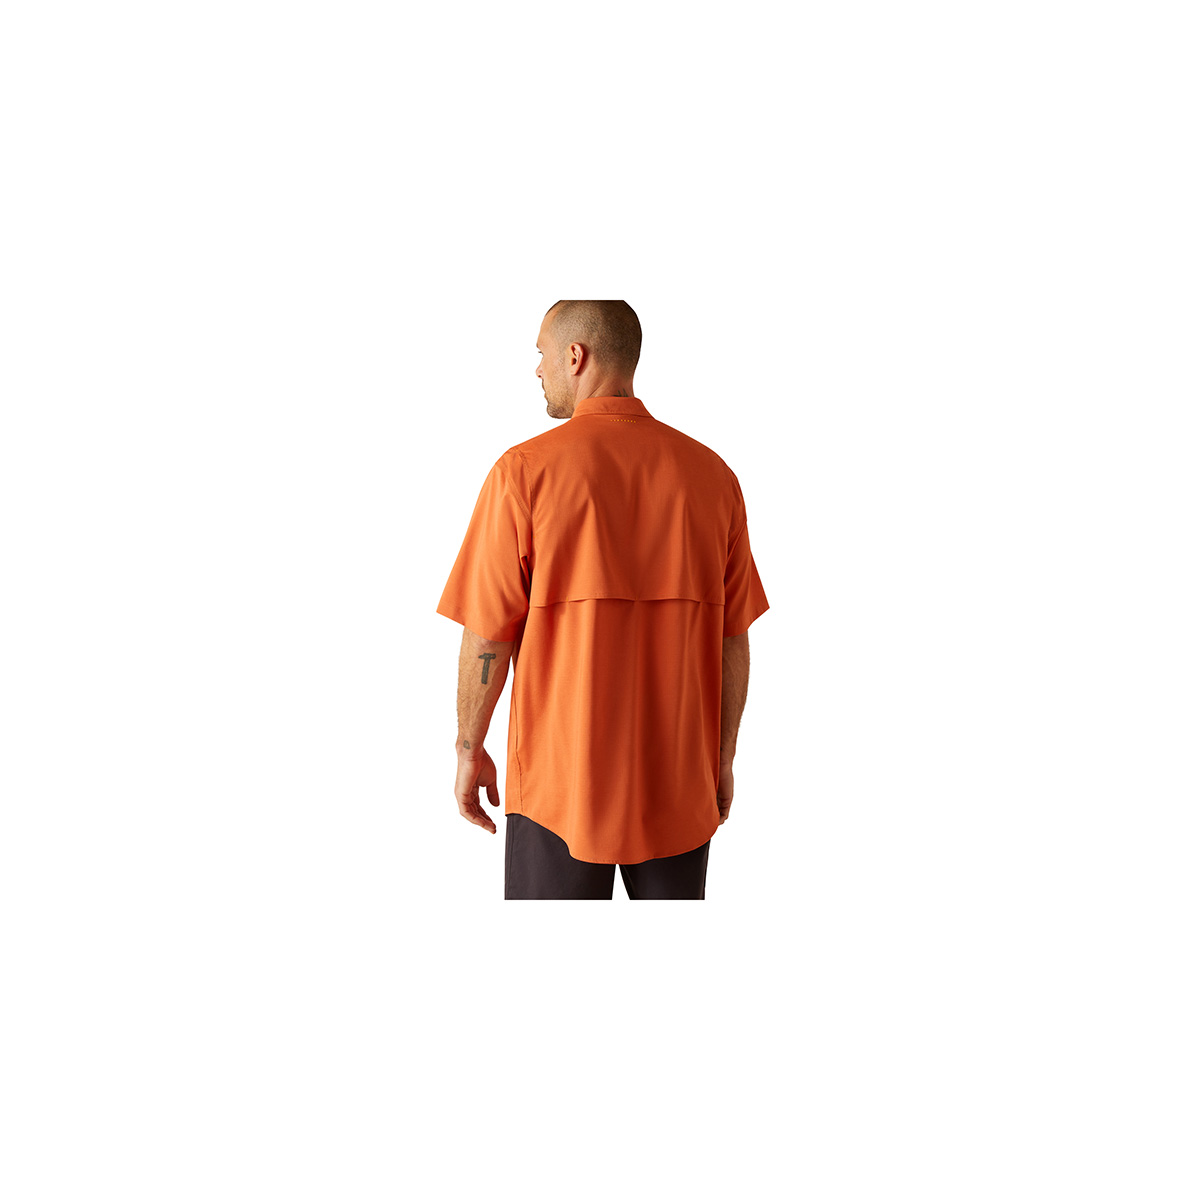 Ariat Men's Rebar Made Tough VentTEK DuraStretch Short Sleeve Work Shirt-Orange Rust Heather